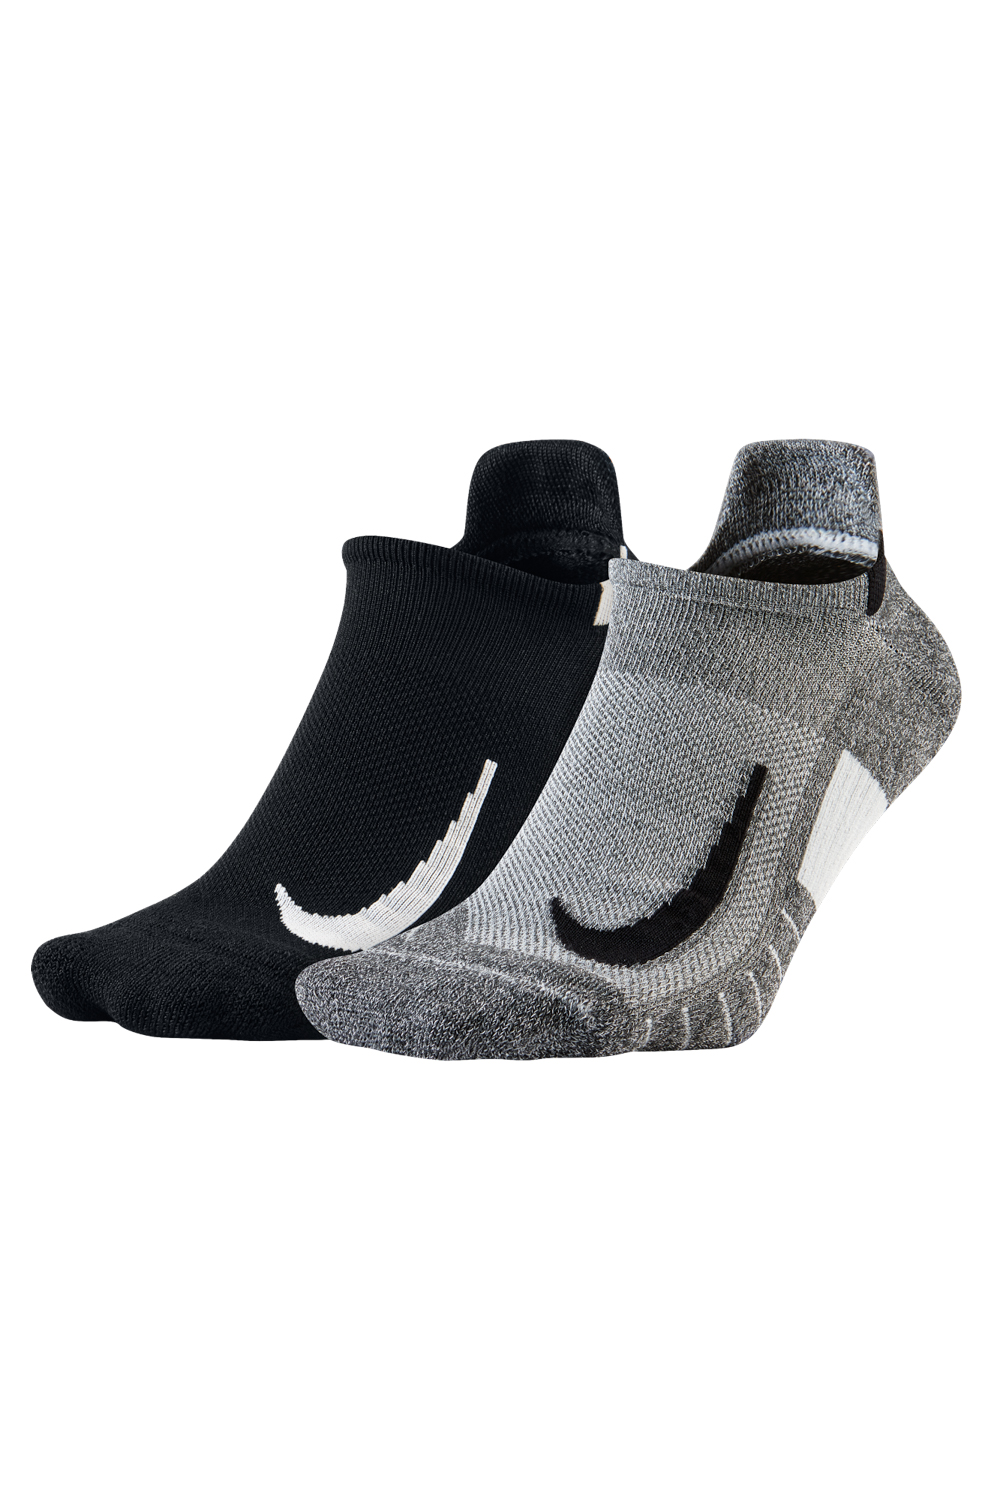 NIKE – Κάλτσες Nike Multiplier σετ των 2 γκρι – μαύρο 1643028.1-0100